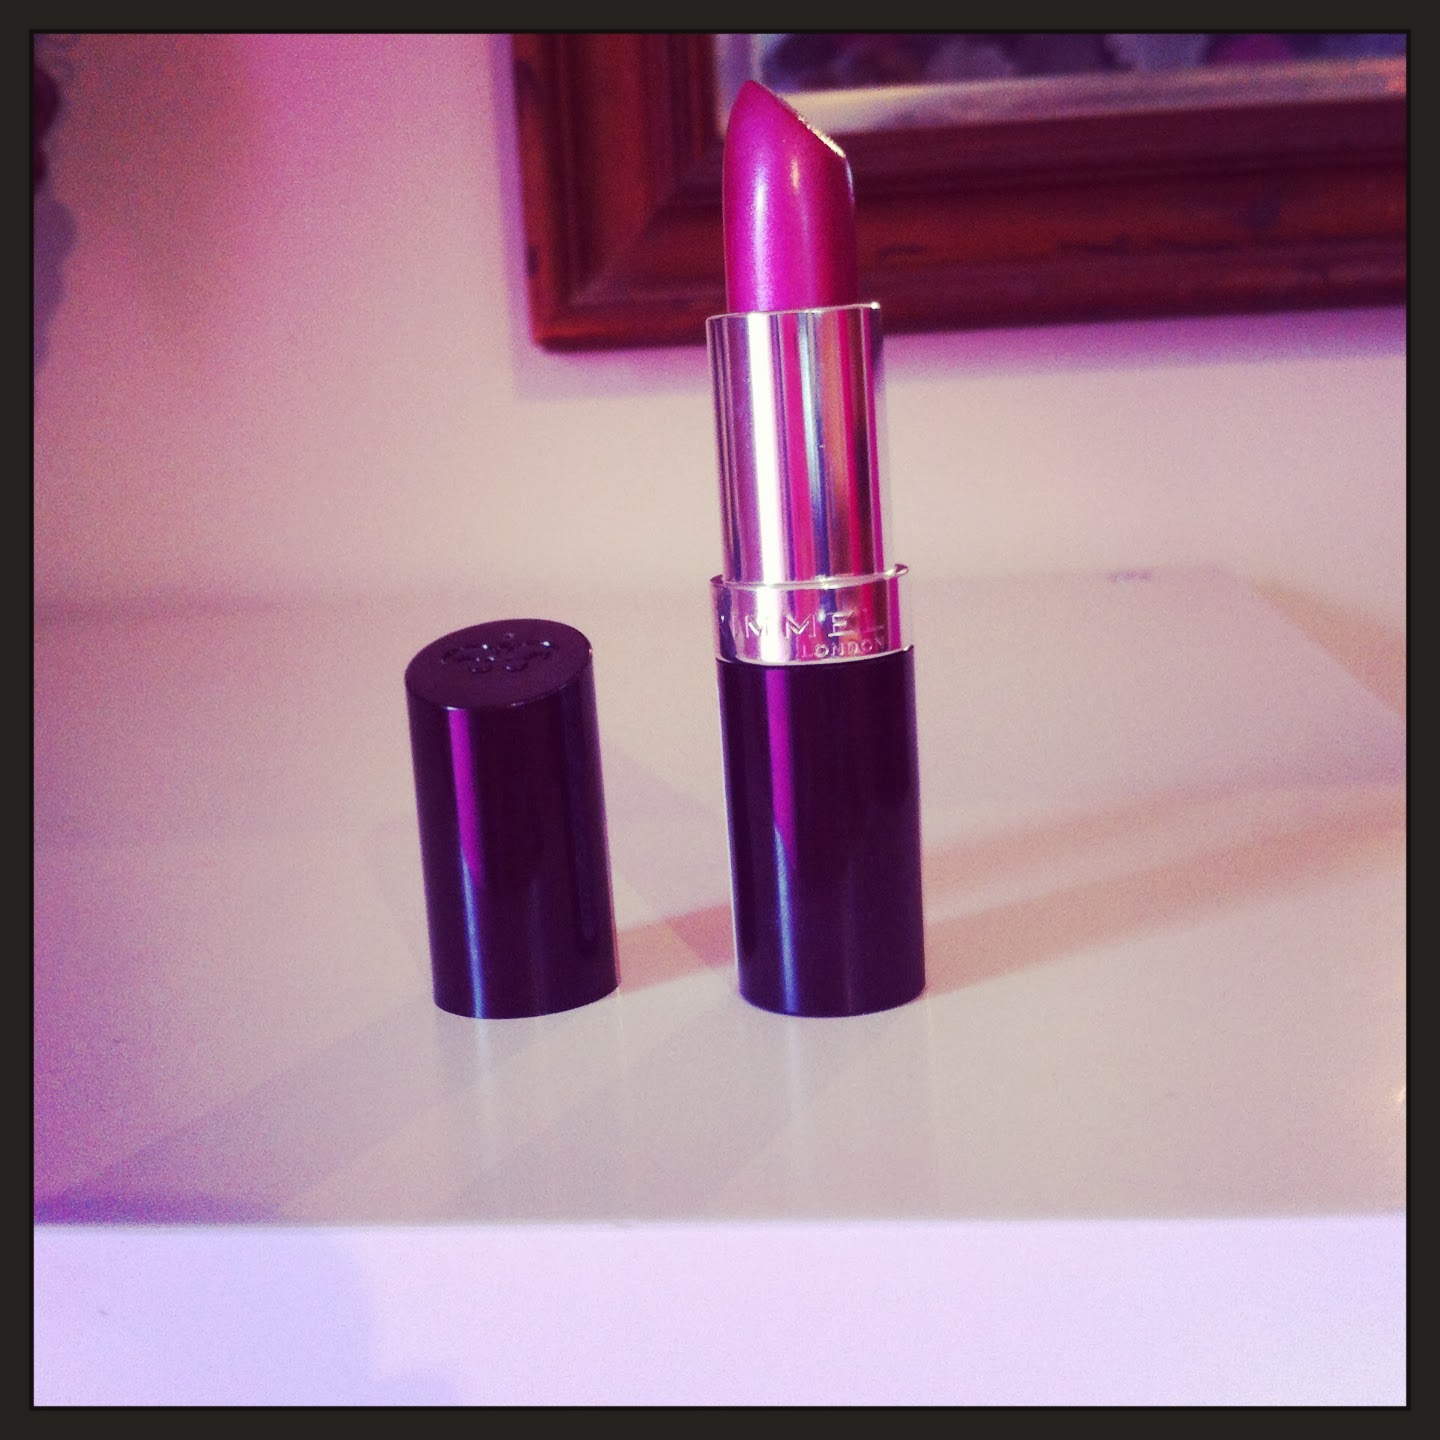 Caramella Couture: Rimmel Lasting Finish Lipstick in Sugar Plum